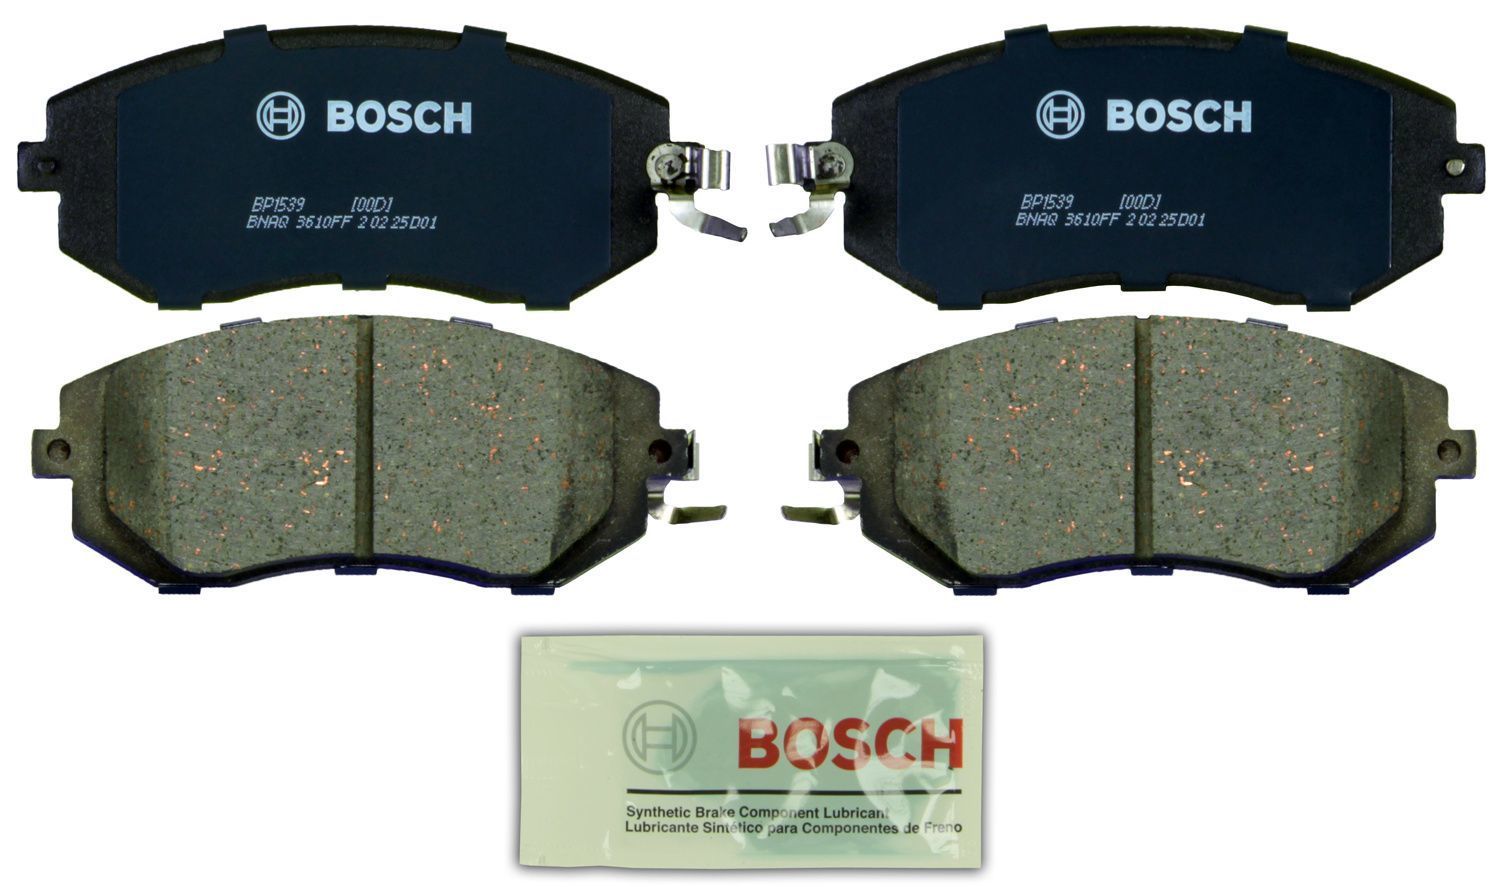 BOSCH BRAKE - Bosch QuietCast Brake Pad Ceramic Brake Pads (Front) - BQC BC1539